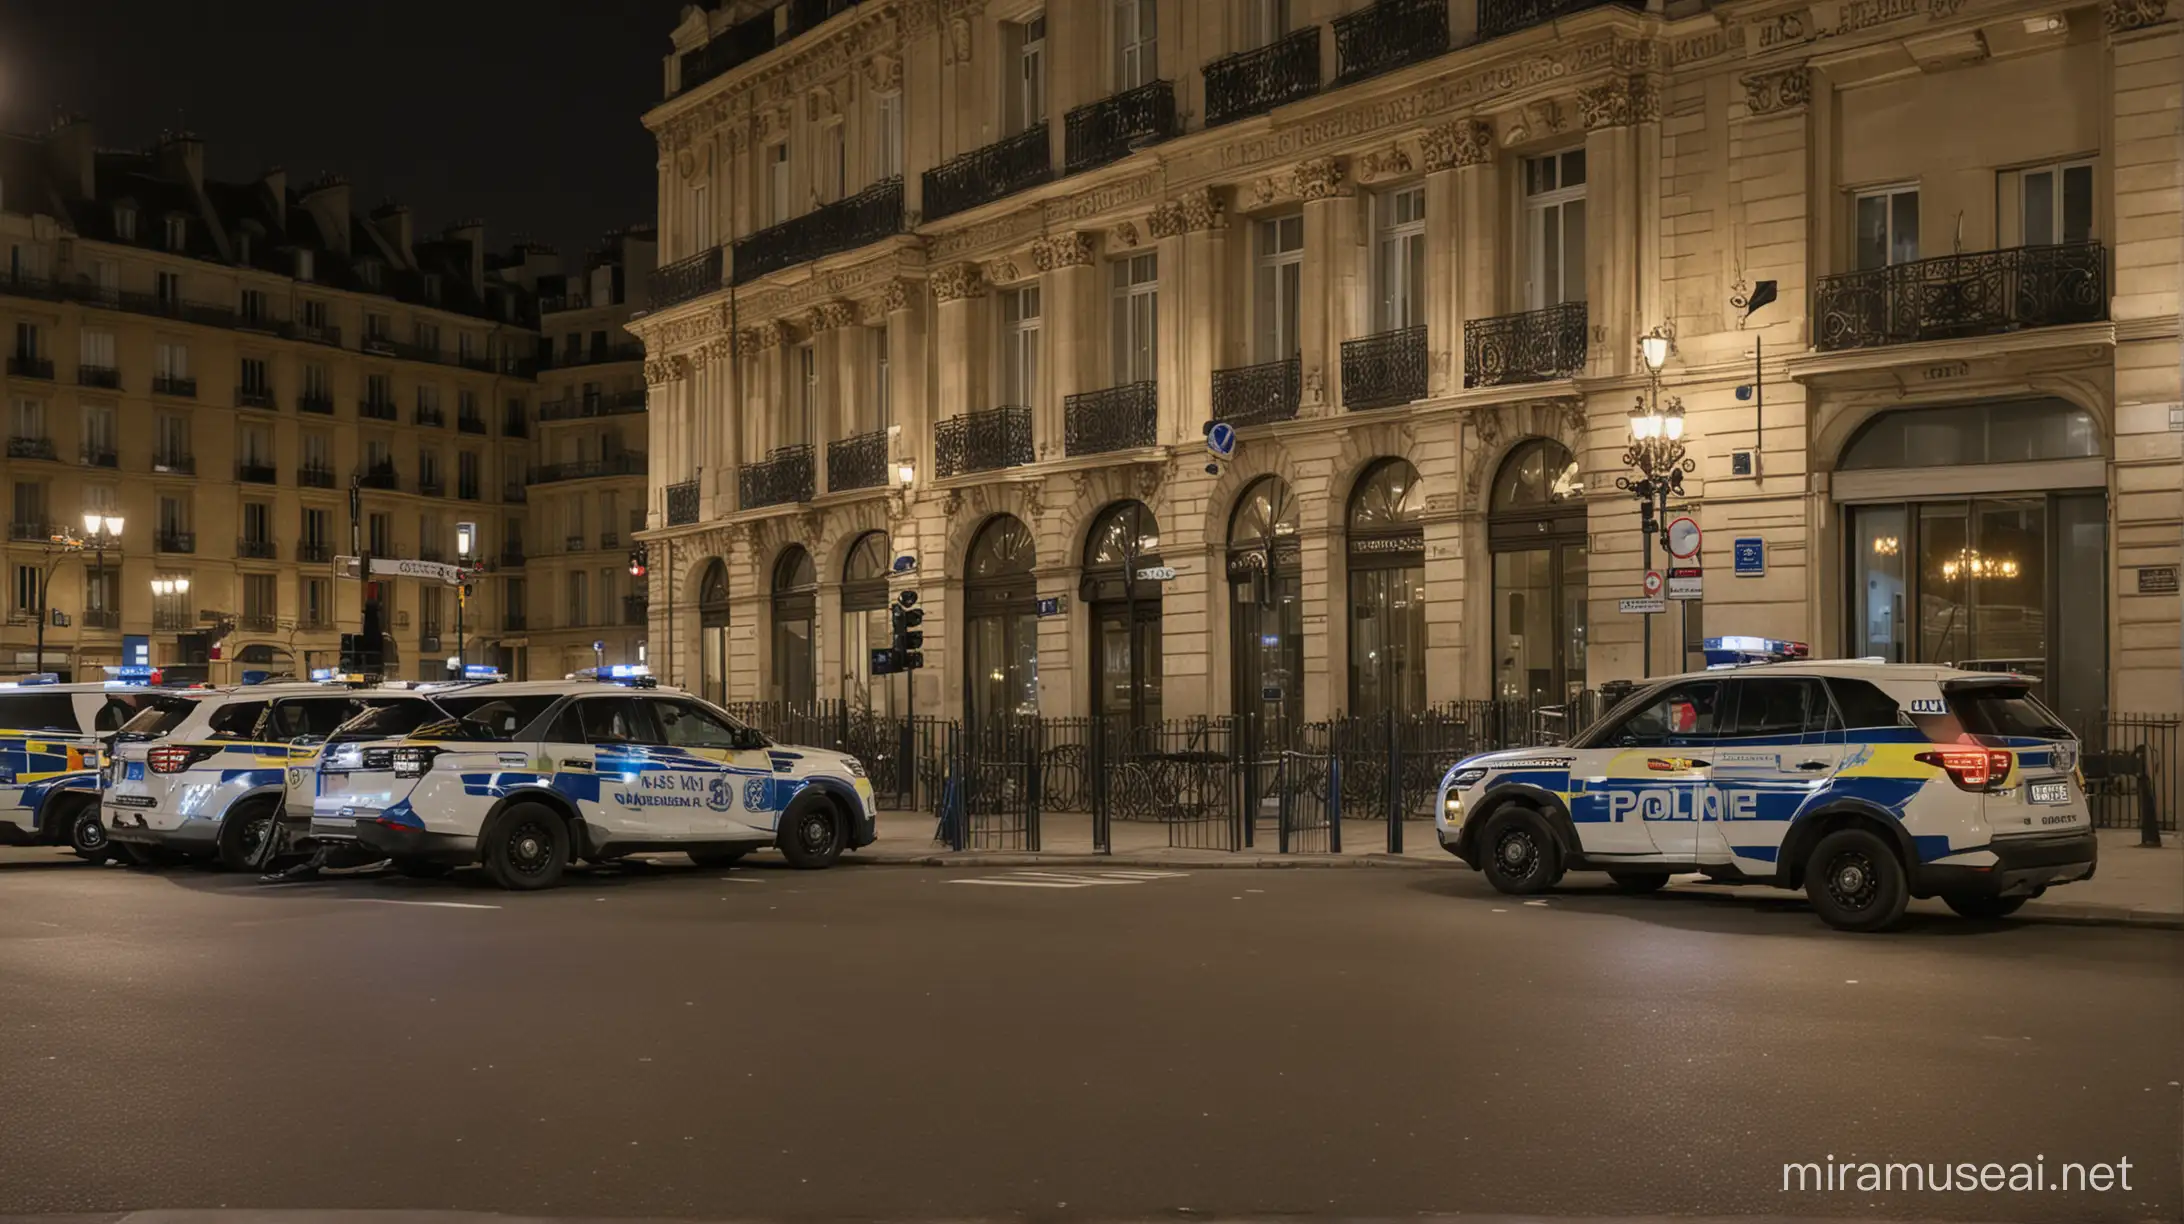 Parisian Building Under Police Surveillance at Night